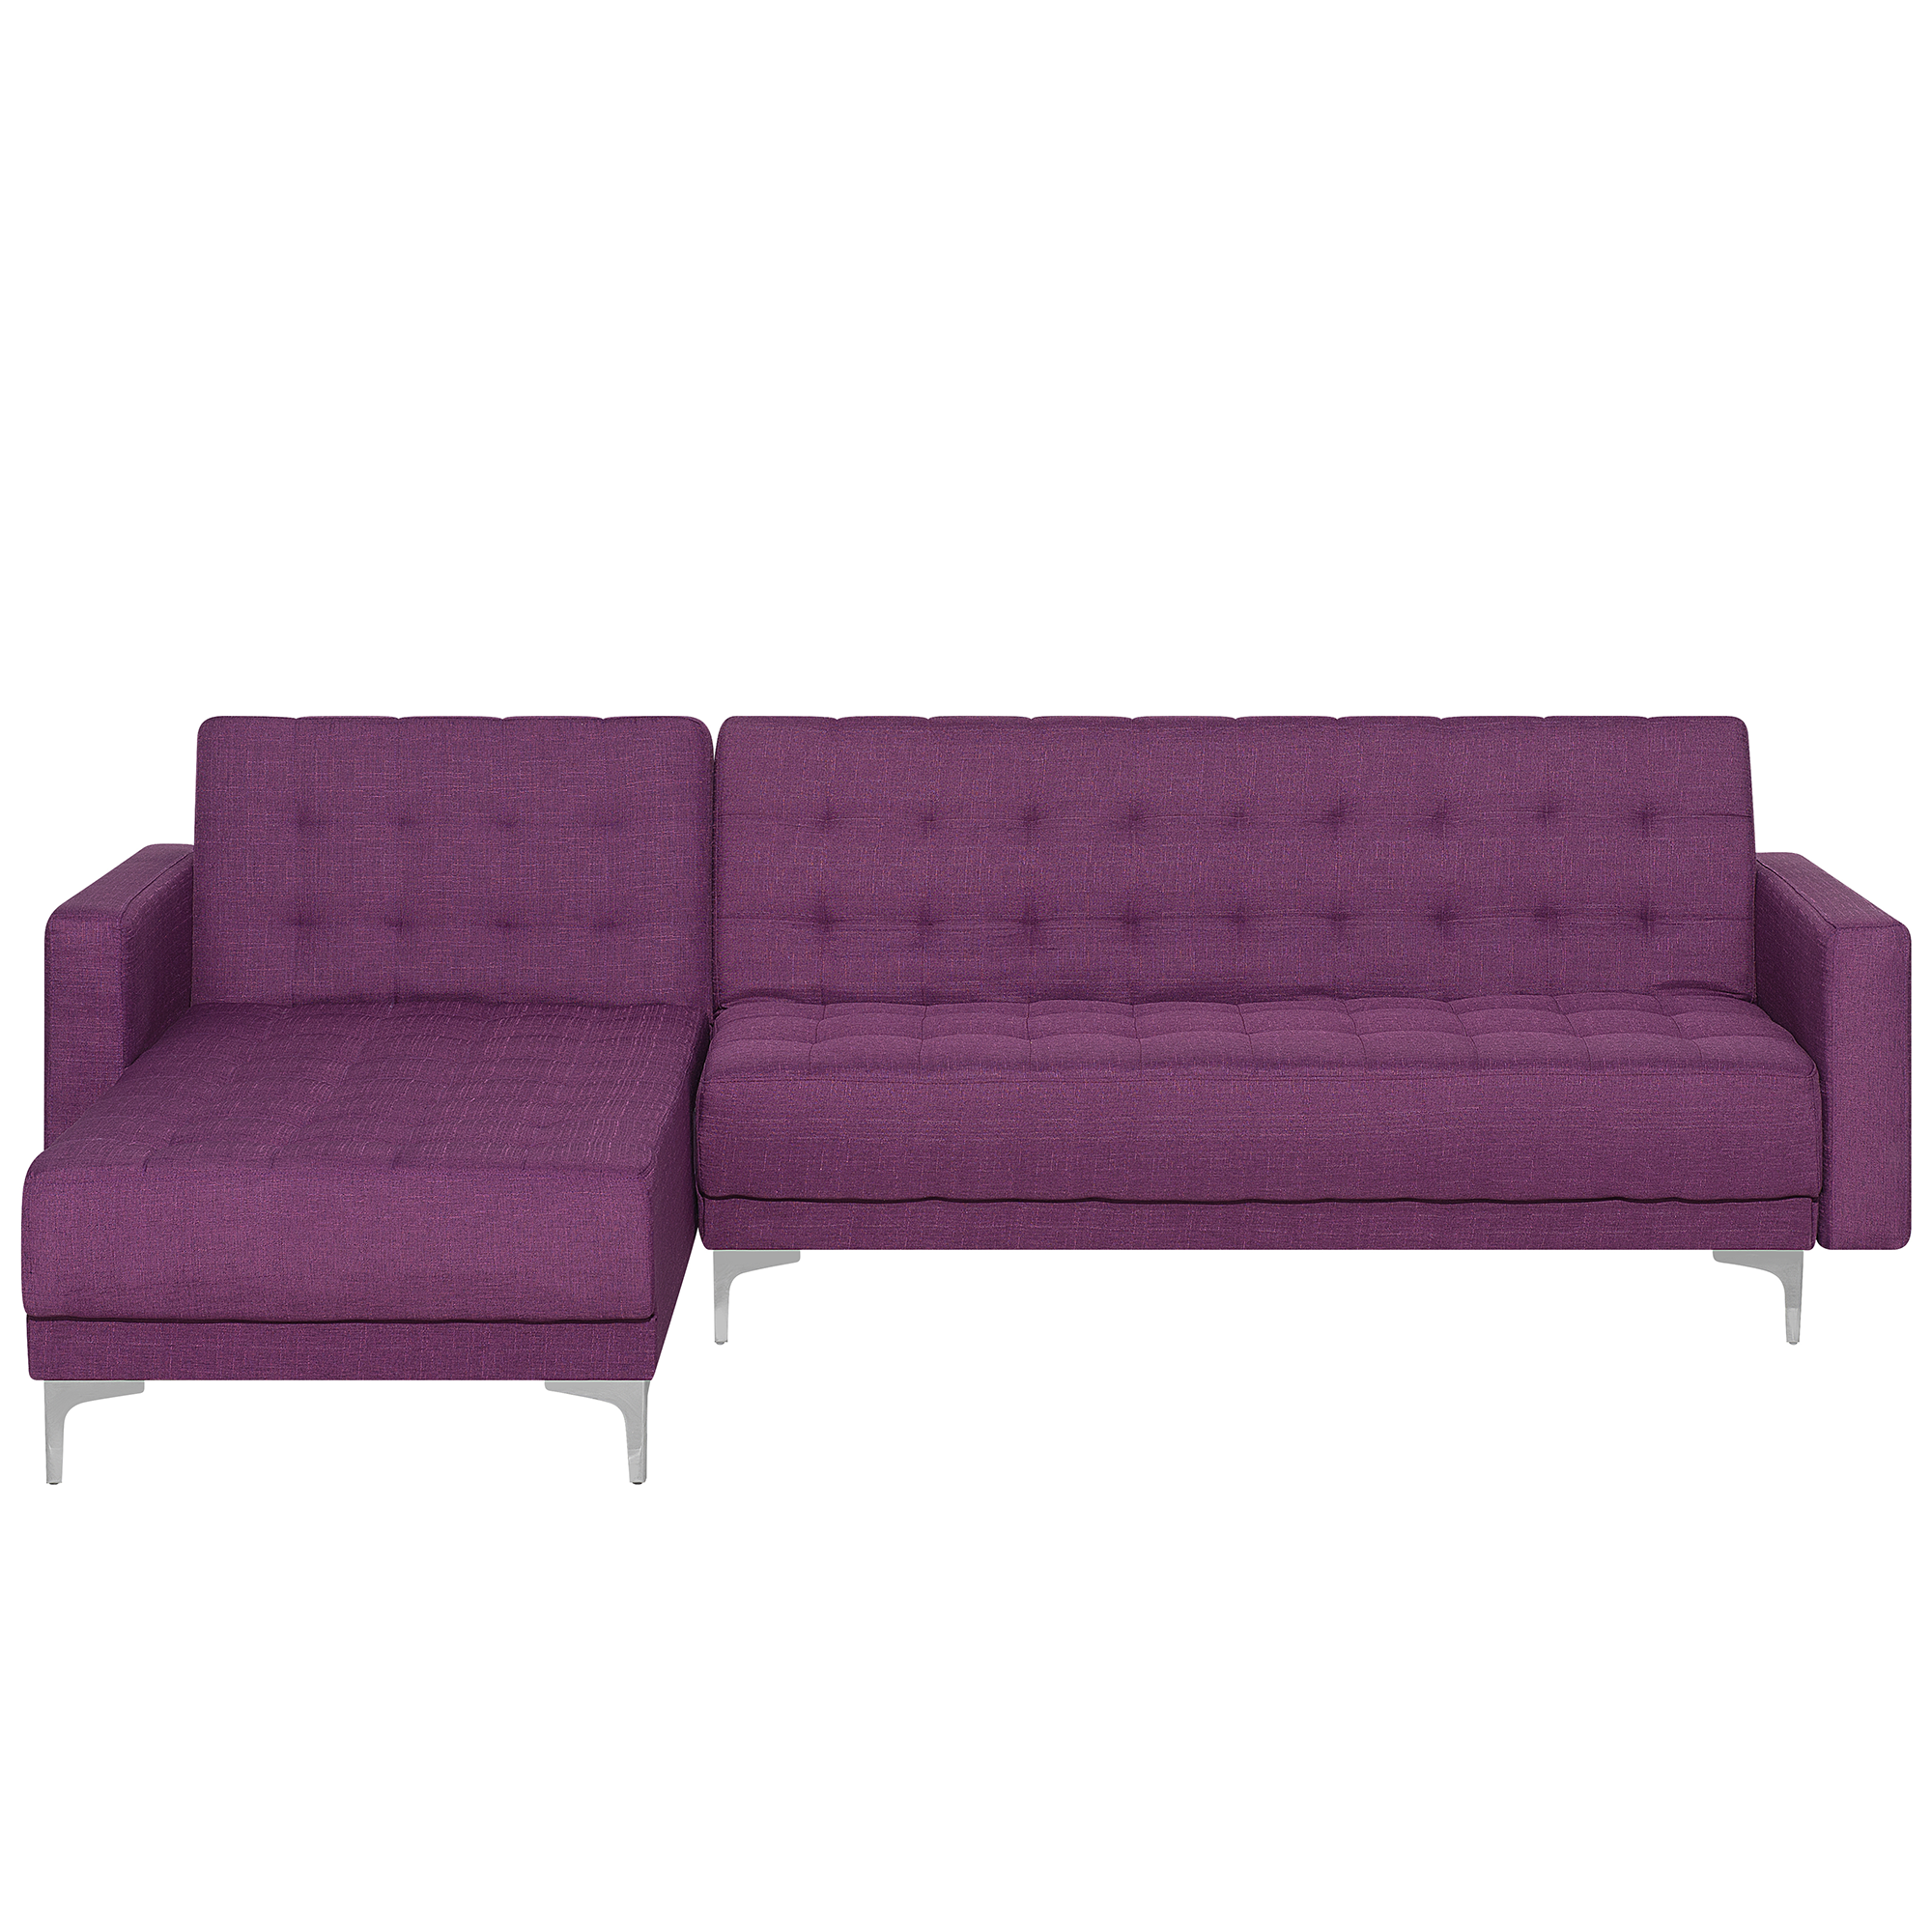 Beliani Corner Sofa Bed Purple Tufted Fabric Modern L-Shaped Modular 4 Seater Right Hand Chaise Longue